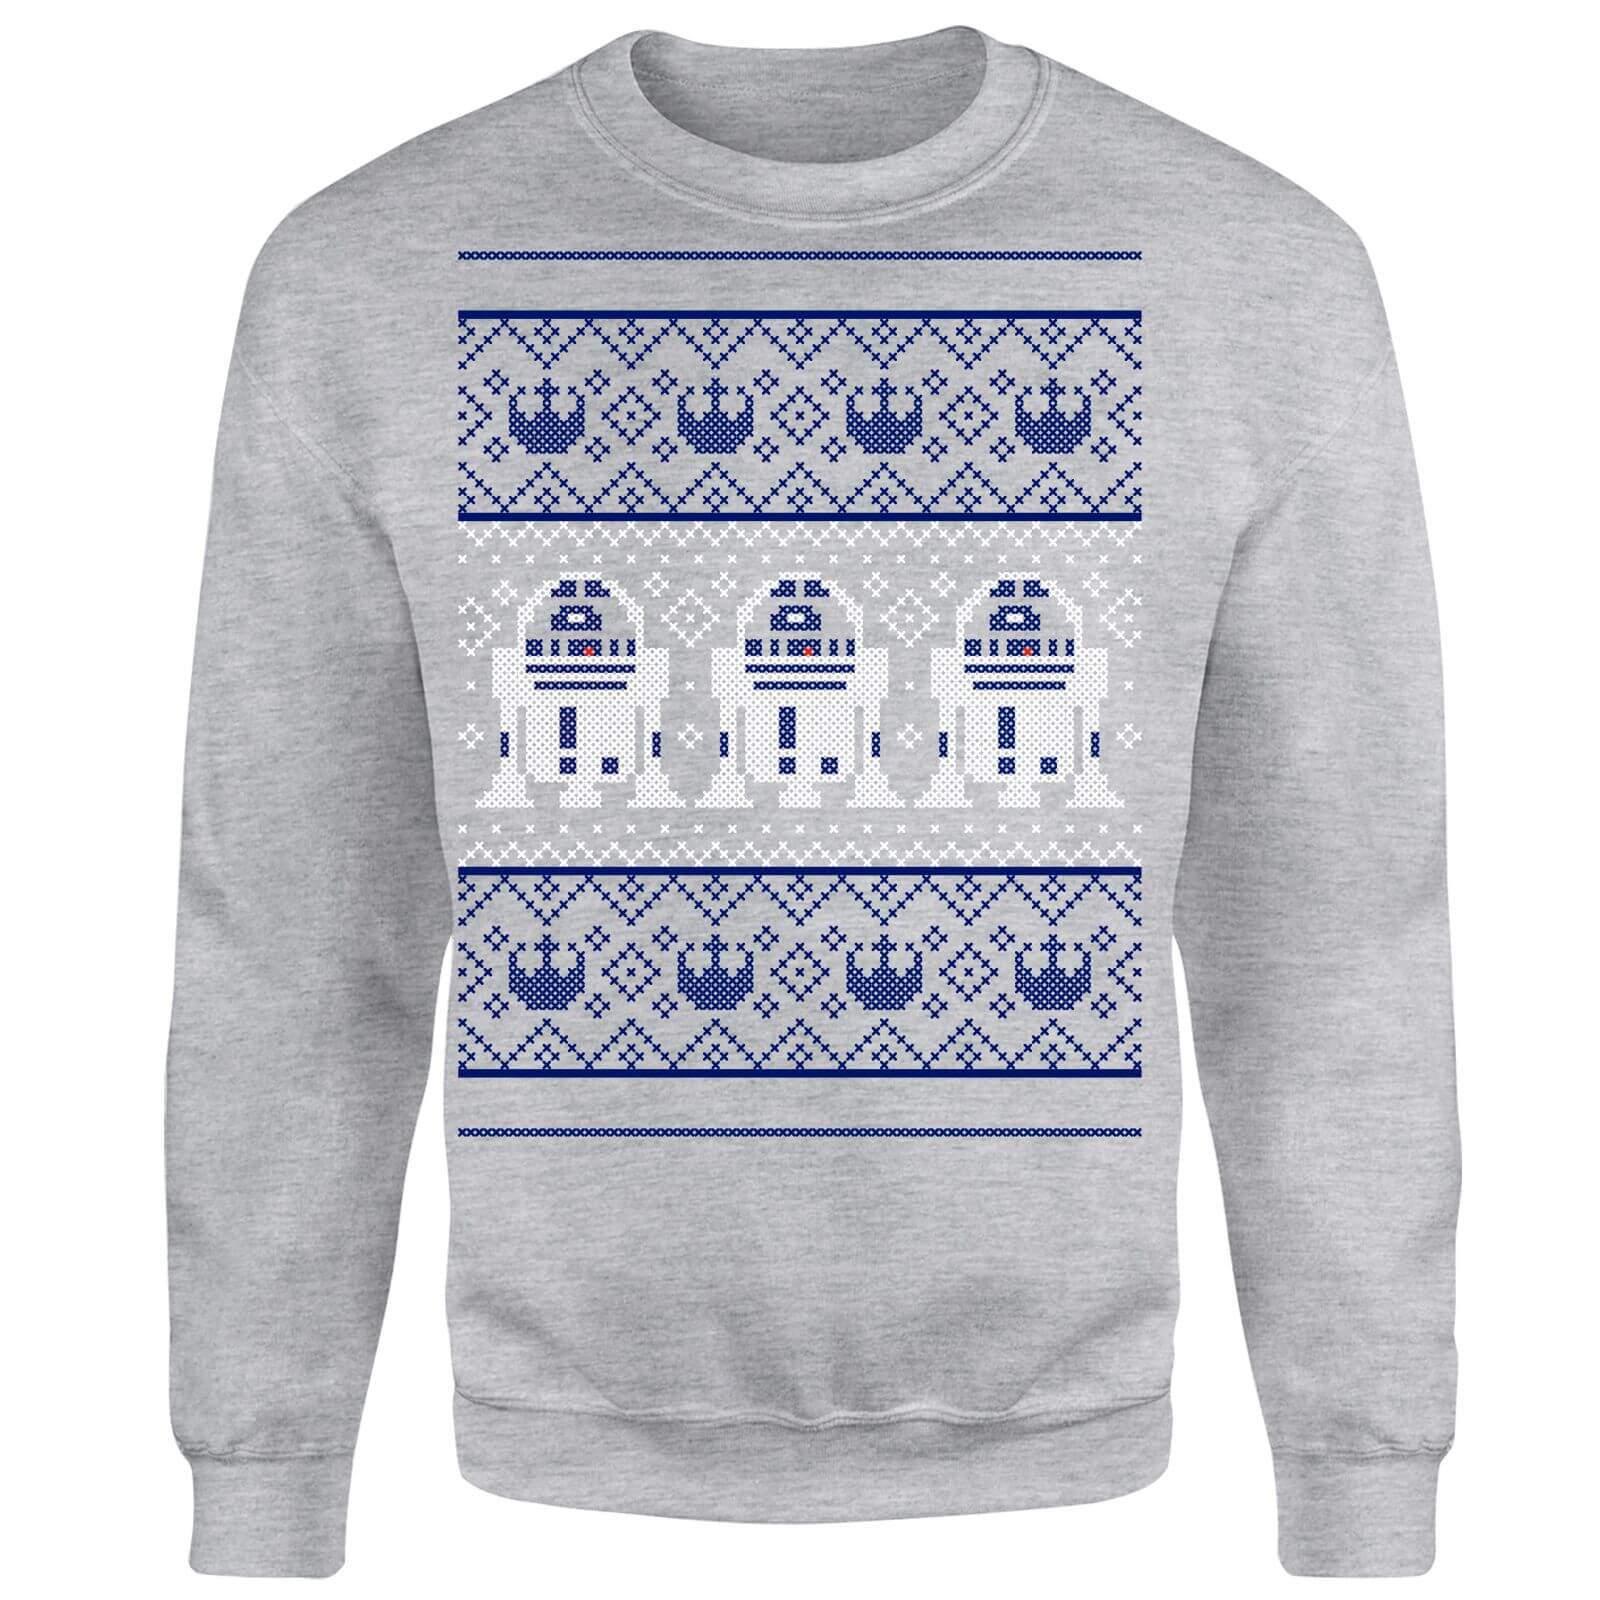 Star Wars R2D2 Christmas Knit Grey Christmas Sweatshirt - S - Grey